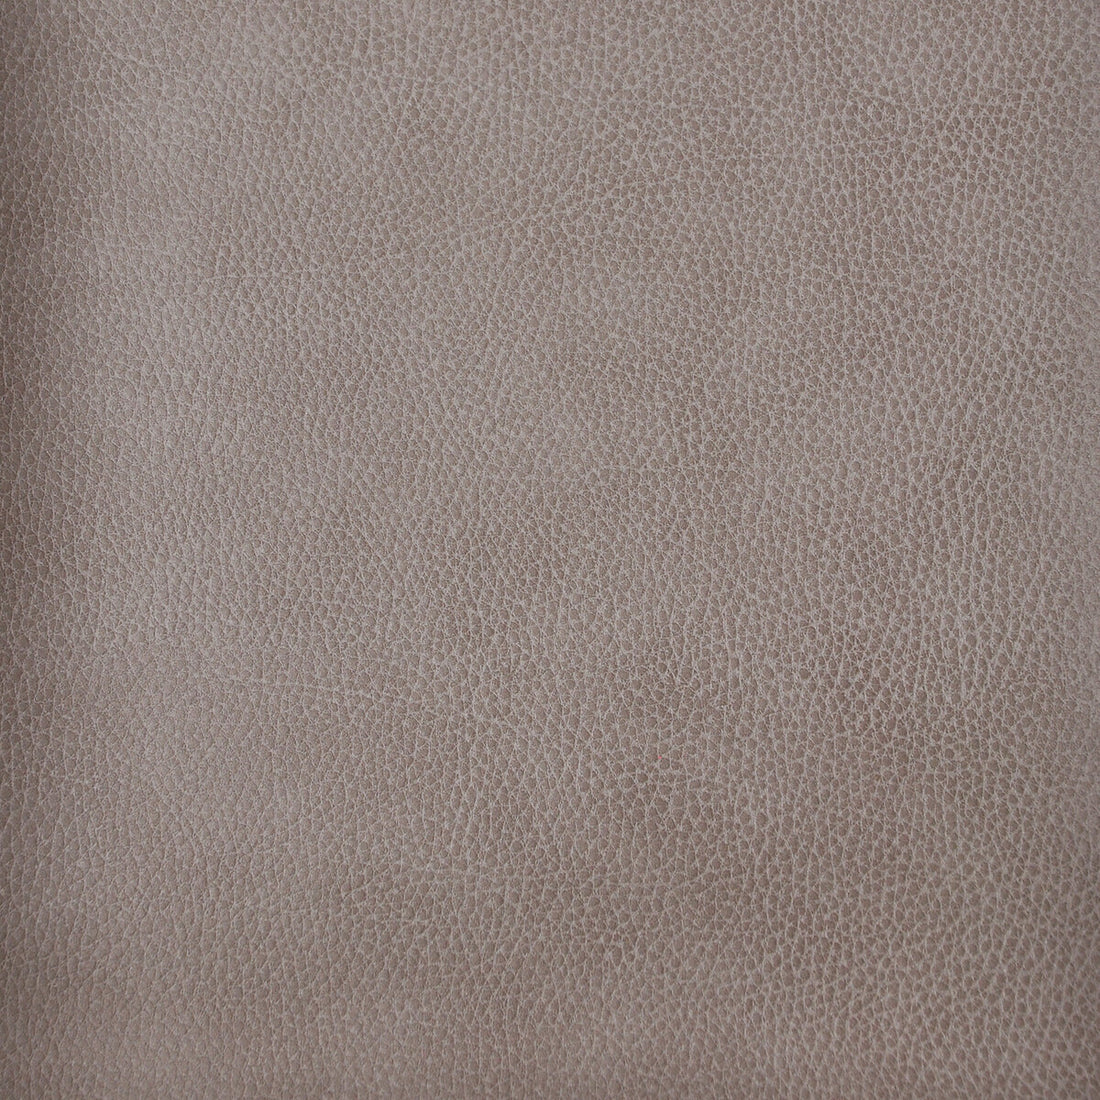 Kravet Design fabric in loris-11 color - pattern LORIS.11.0 - by Kravet Design